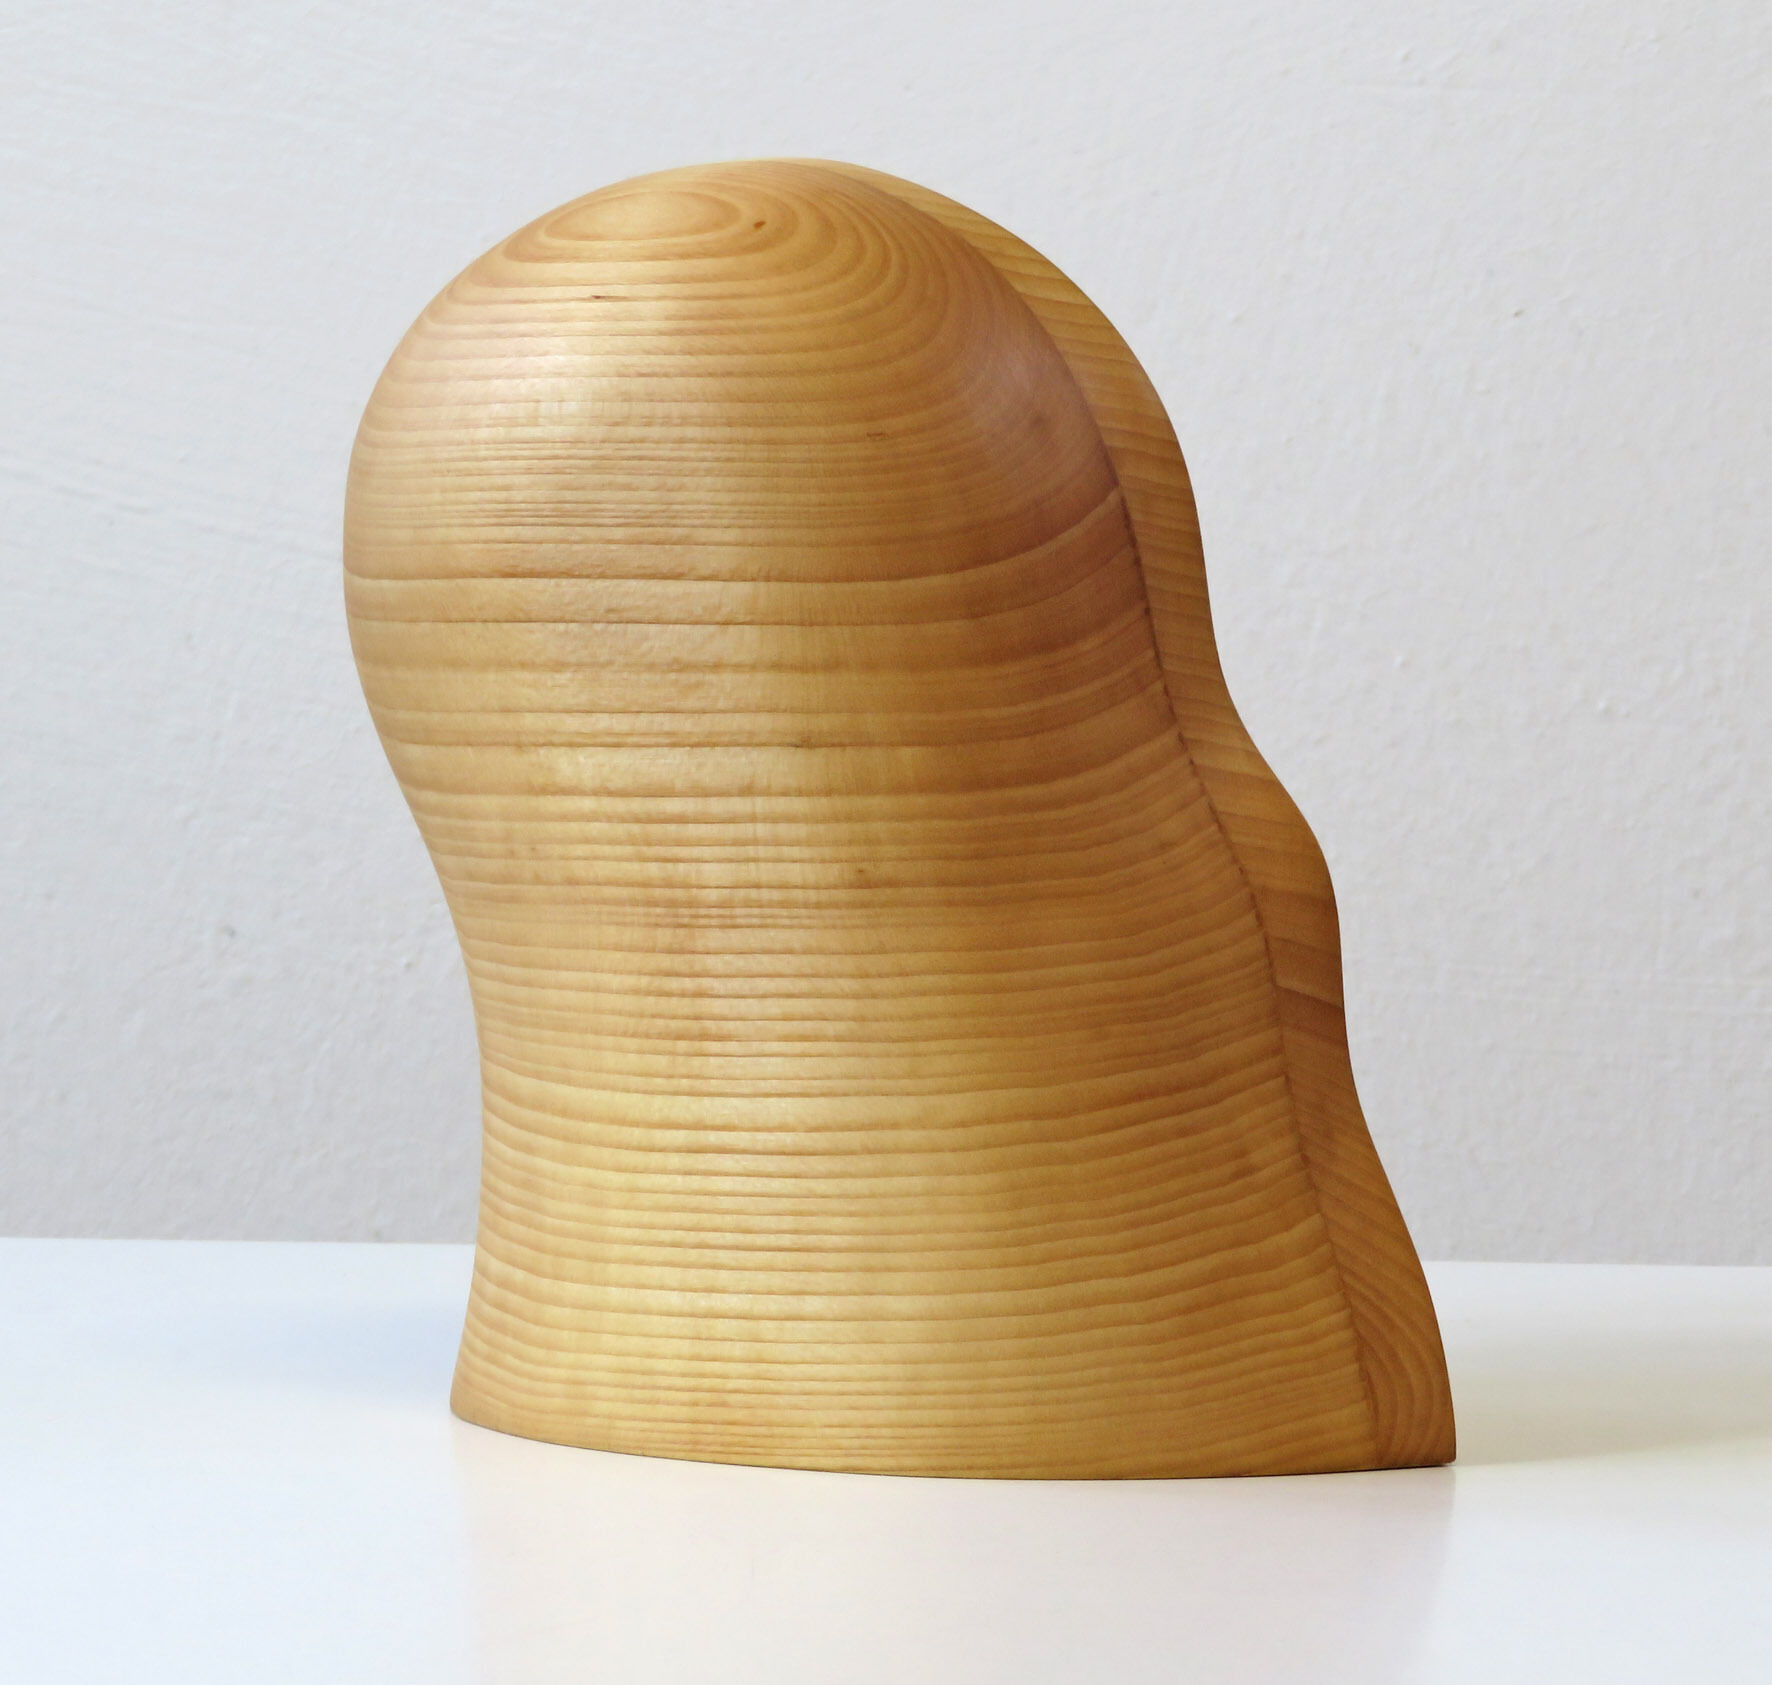 Sculpture "Head 6" (2022)